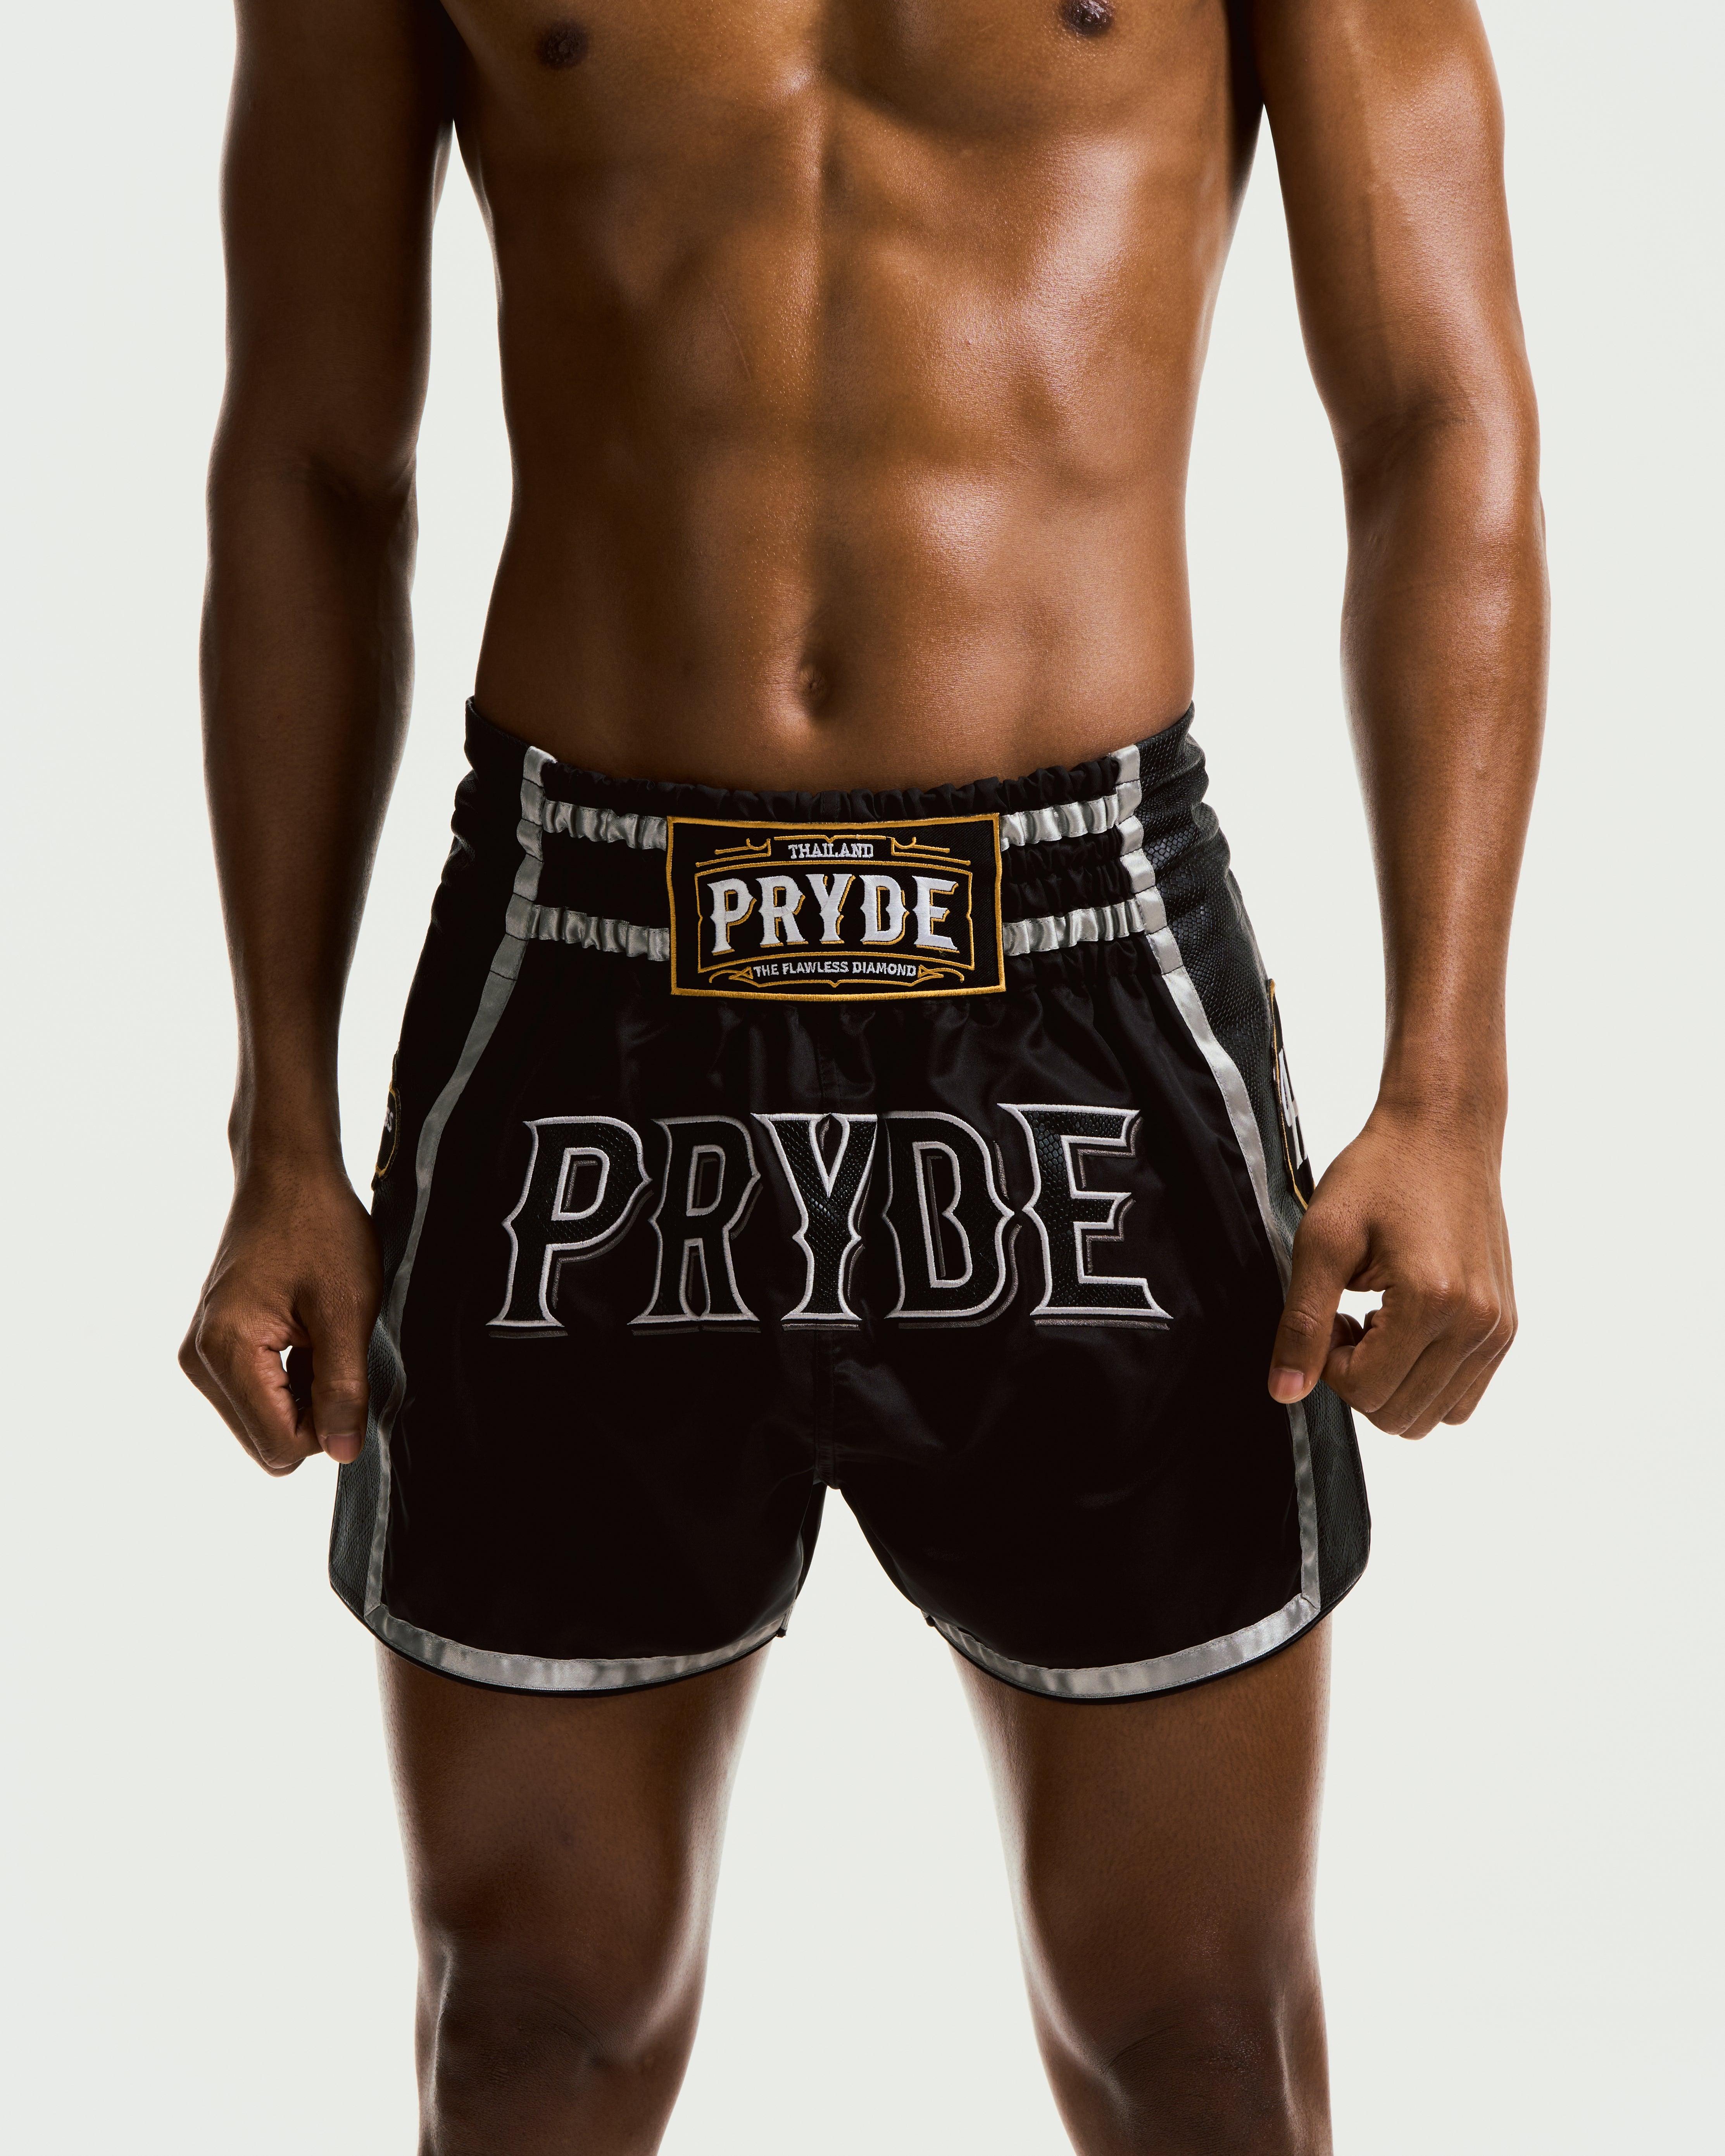 PRYDE Muay Thai Shorts - Black & Black - Muay Thailand